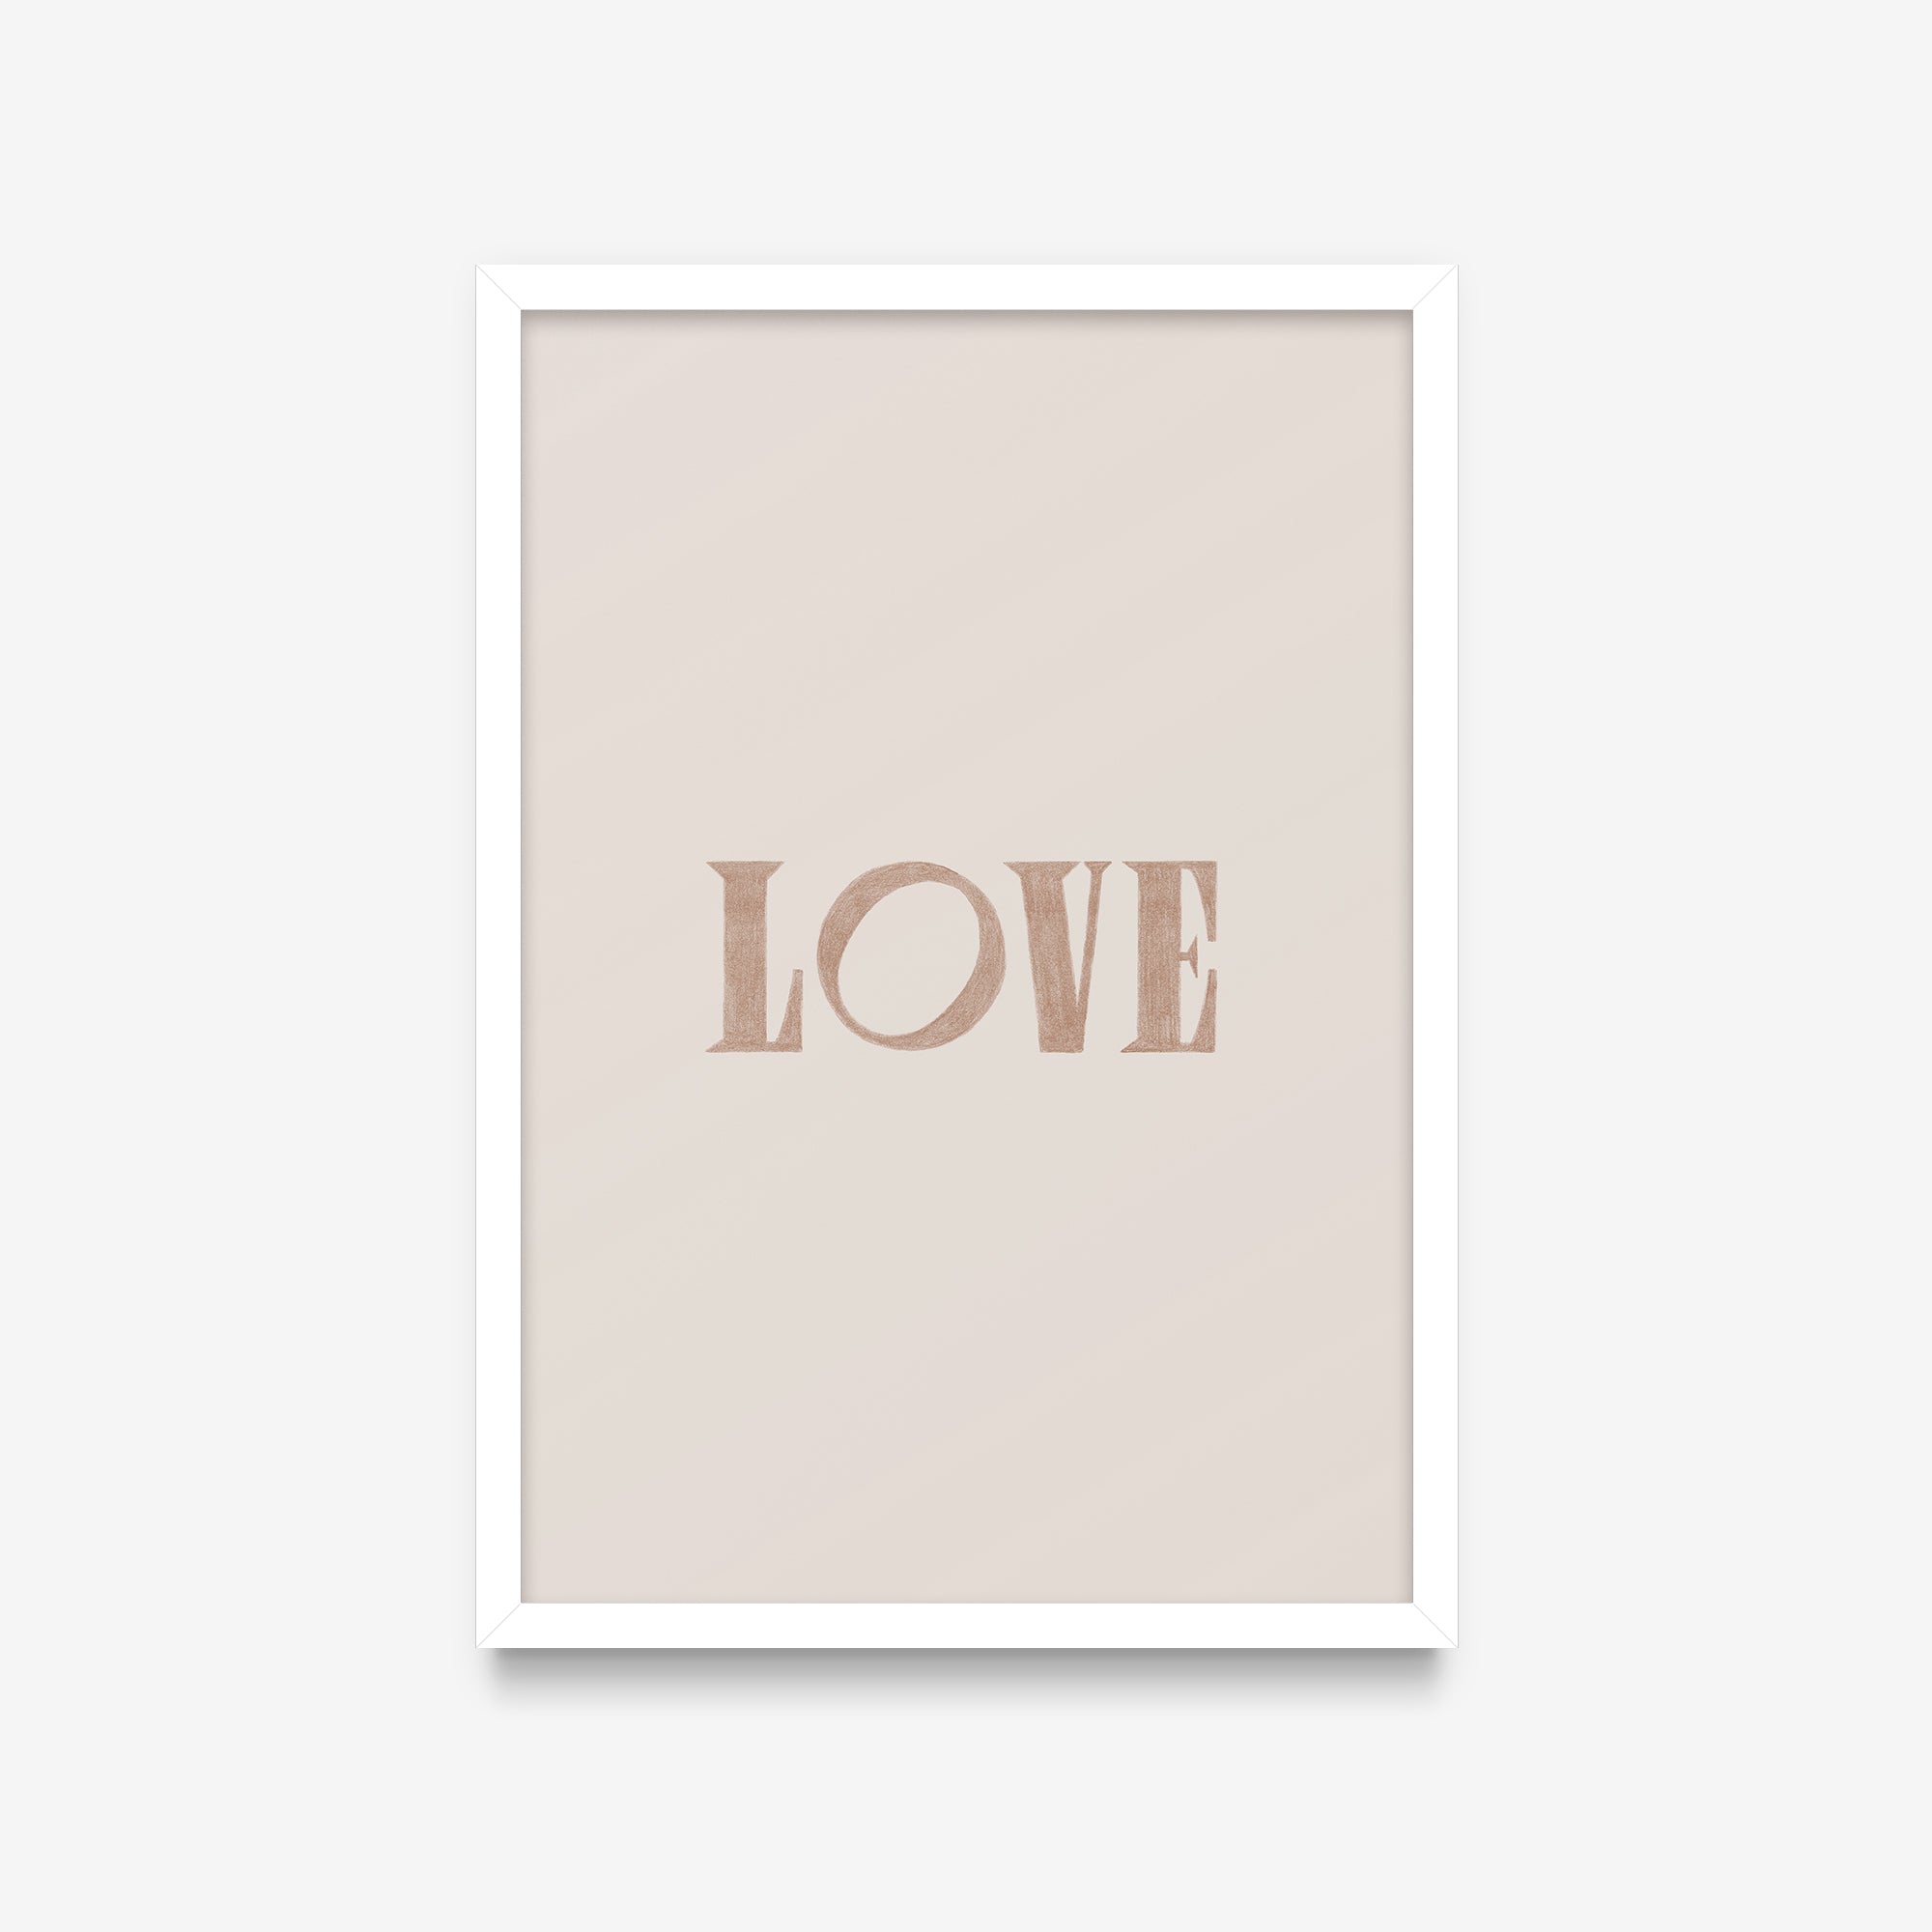 Frases - Love | Estúdio Amor